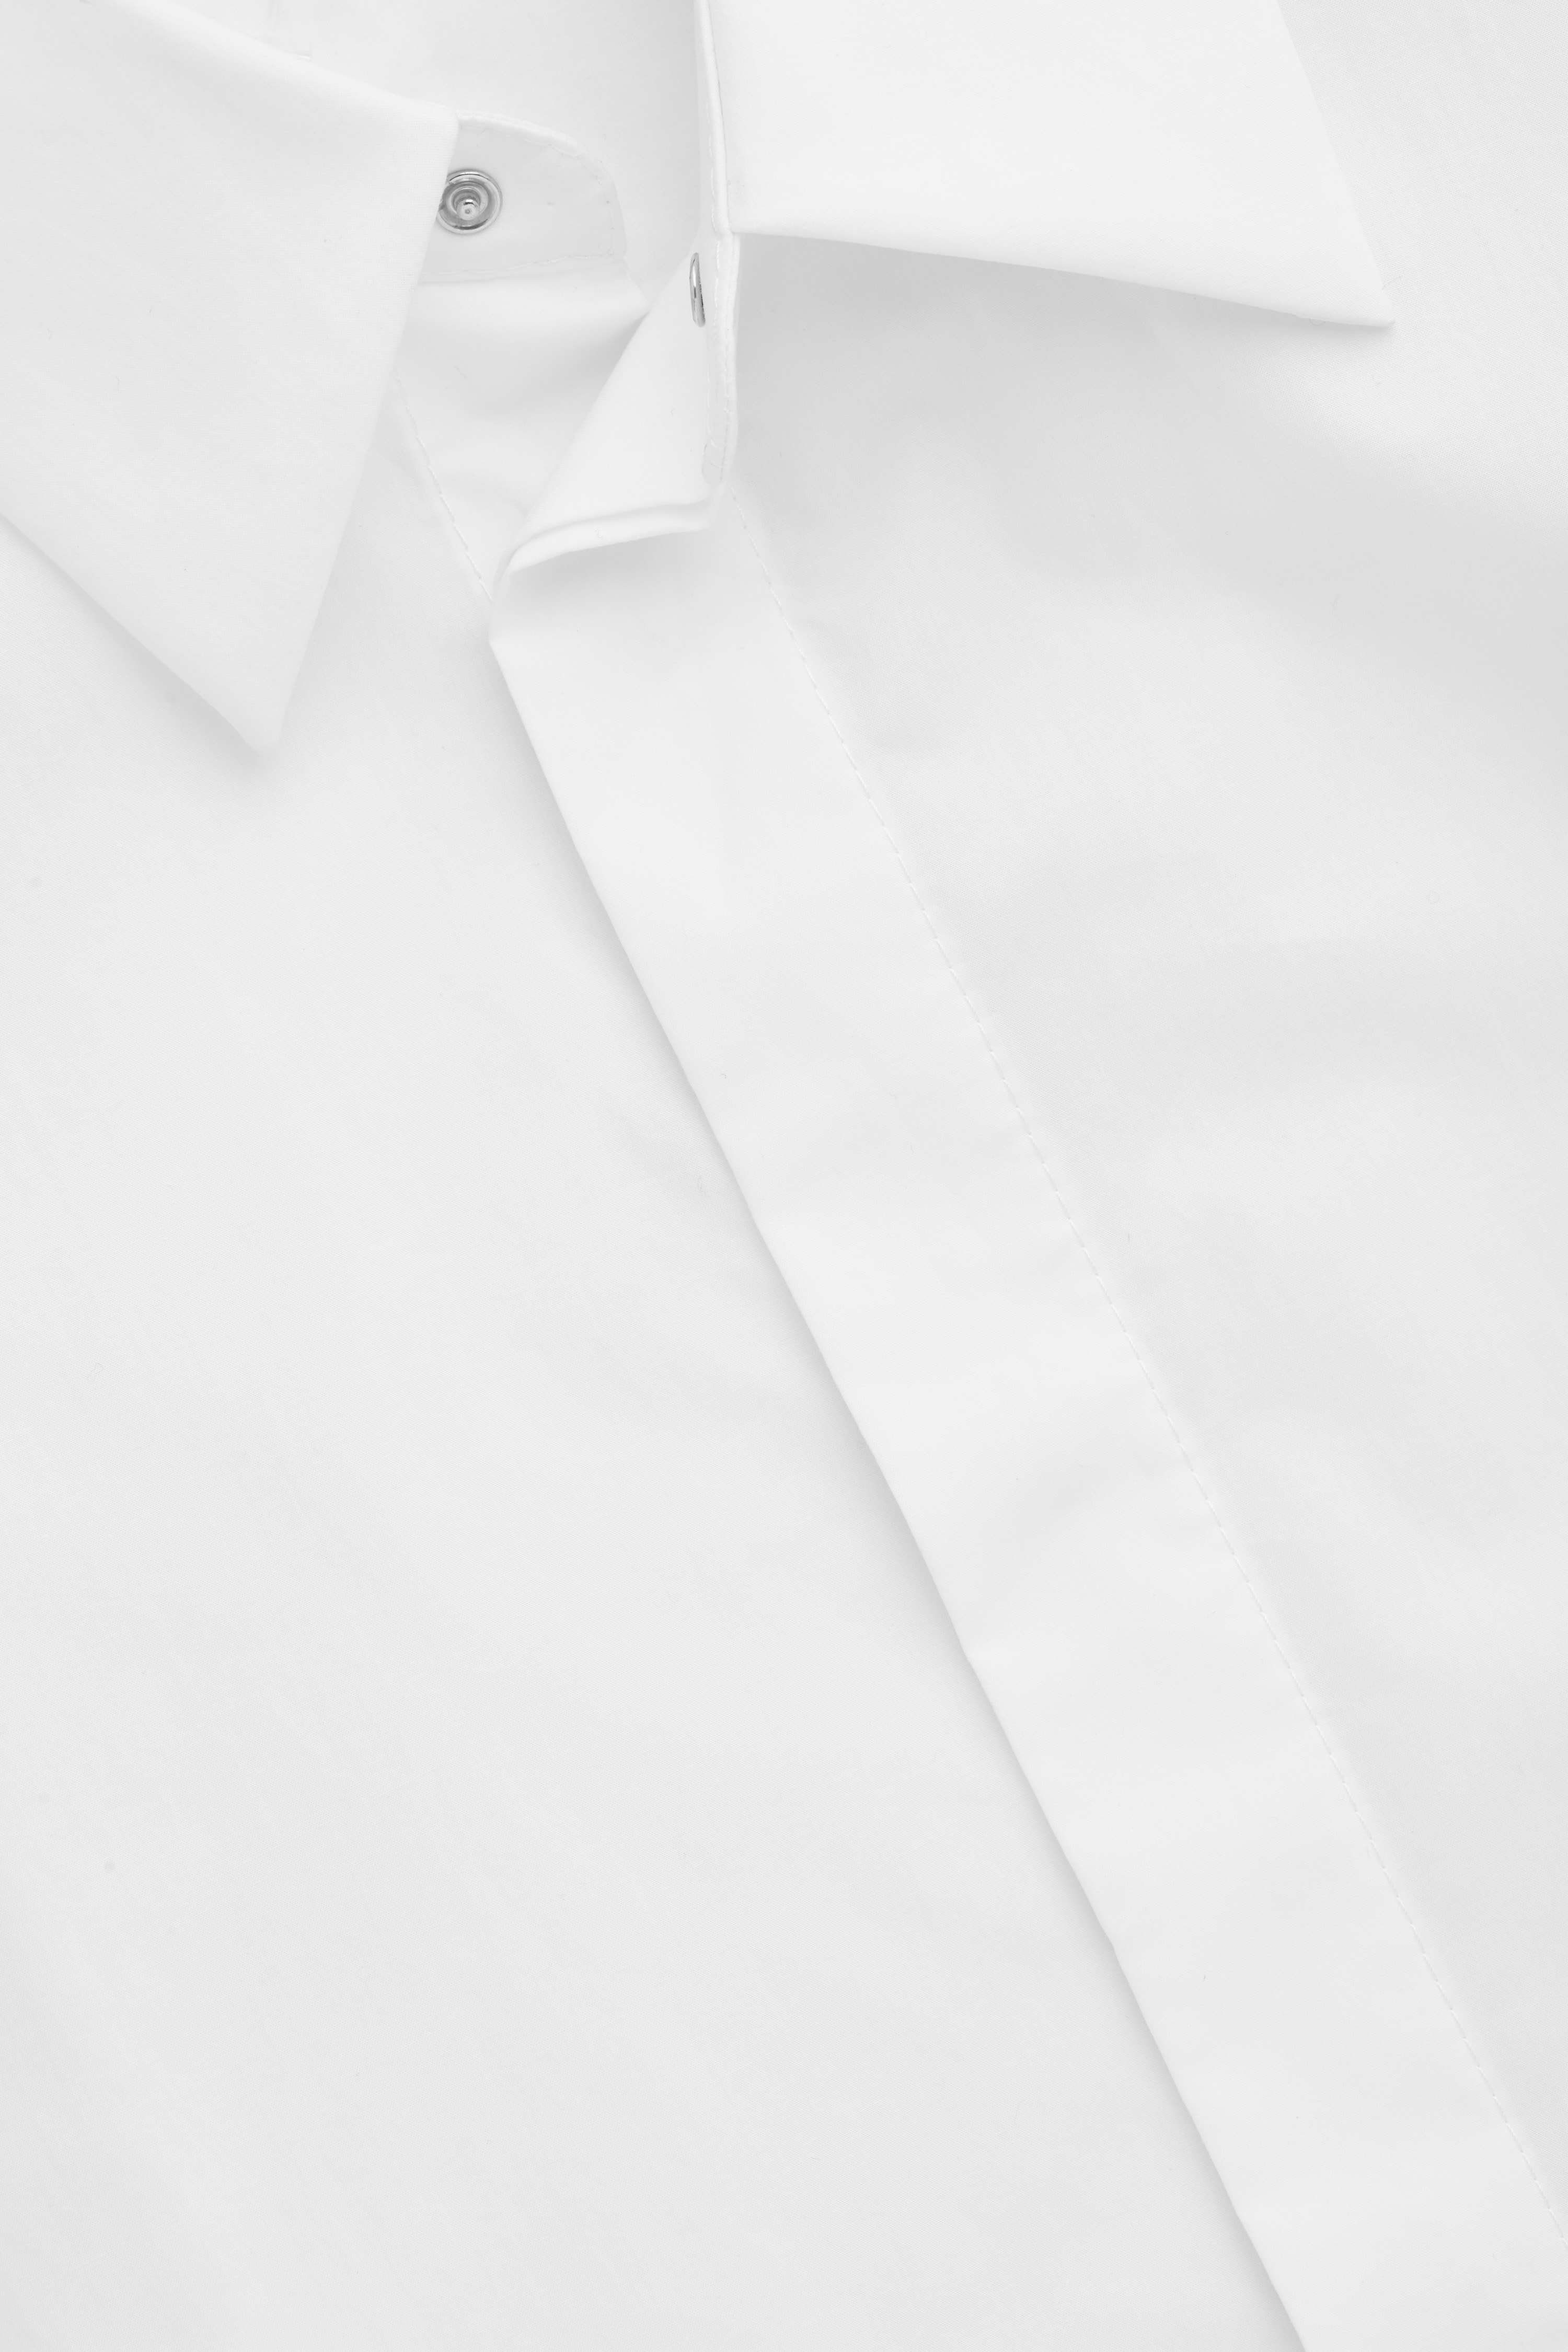 專注剪裁－COS 推出全新 White Shirt Project 系列